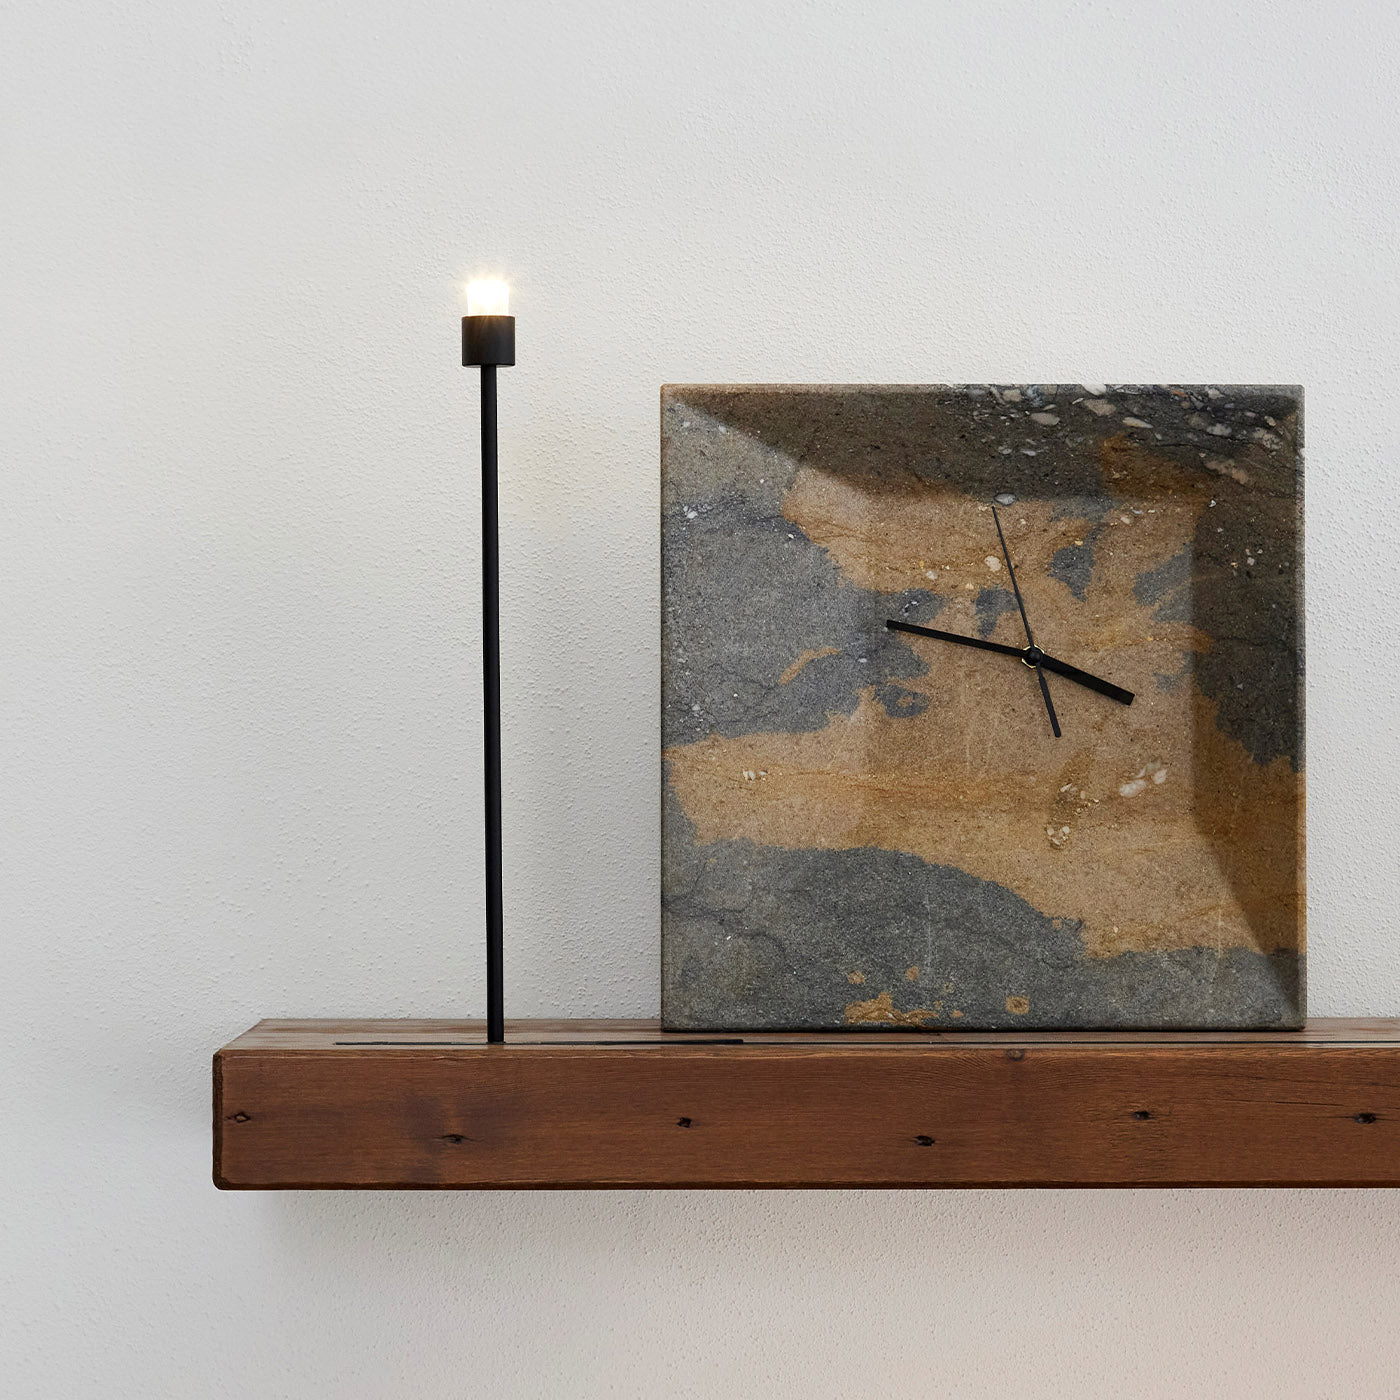 Pietro Table/Wall Clock by Cristian Visentin - Alternative view 2